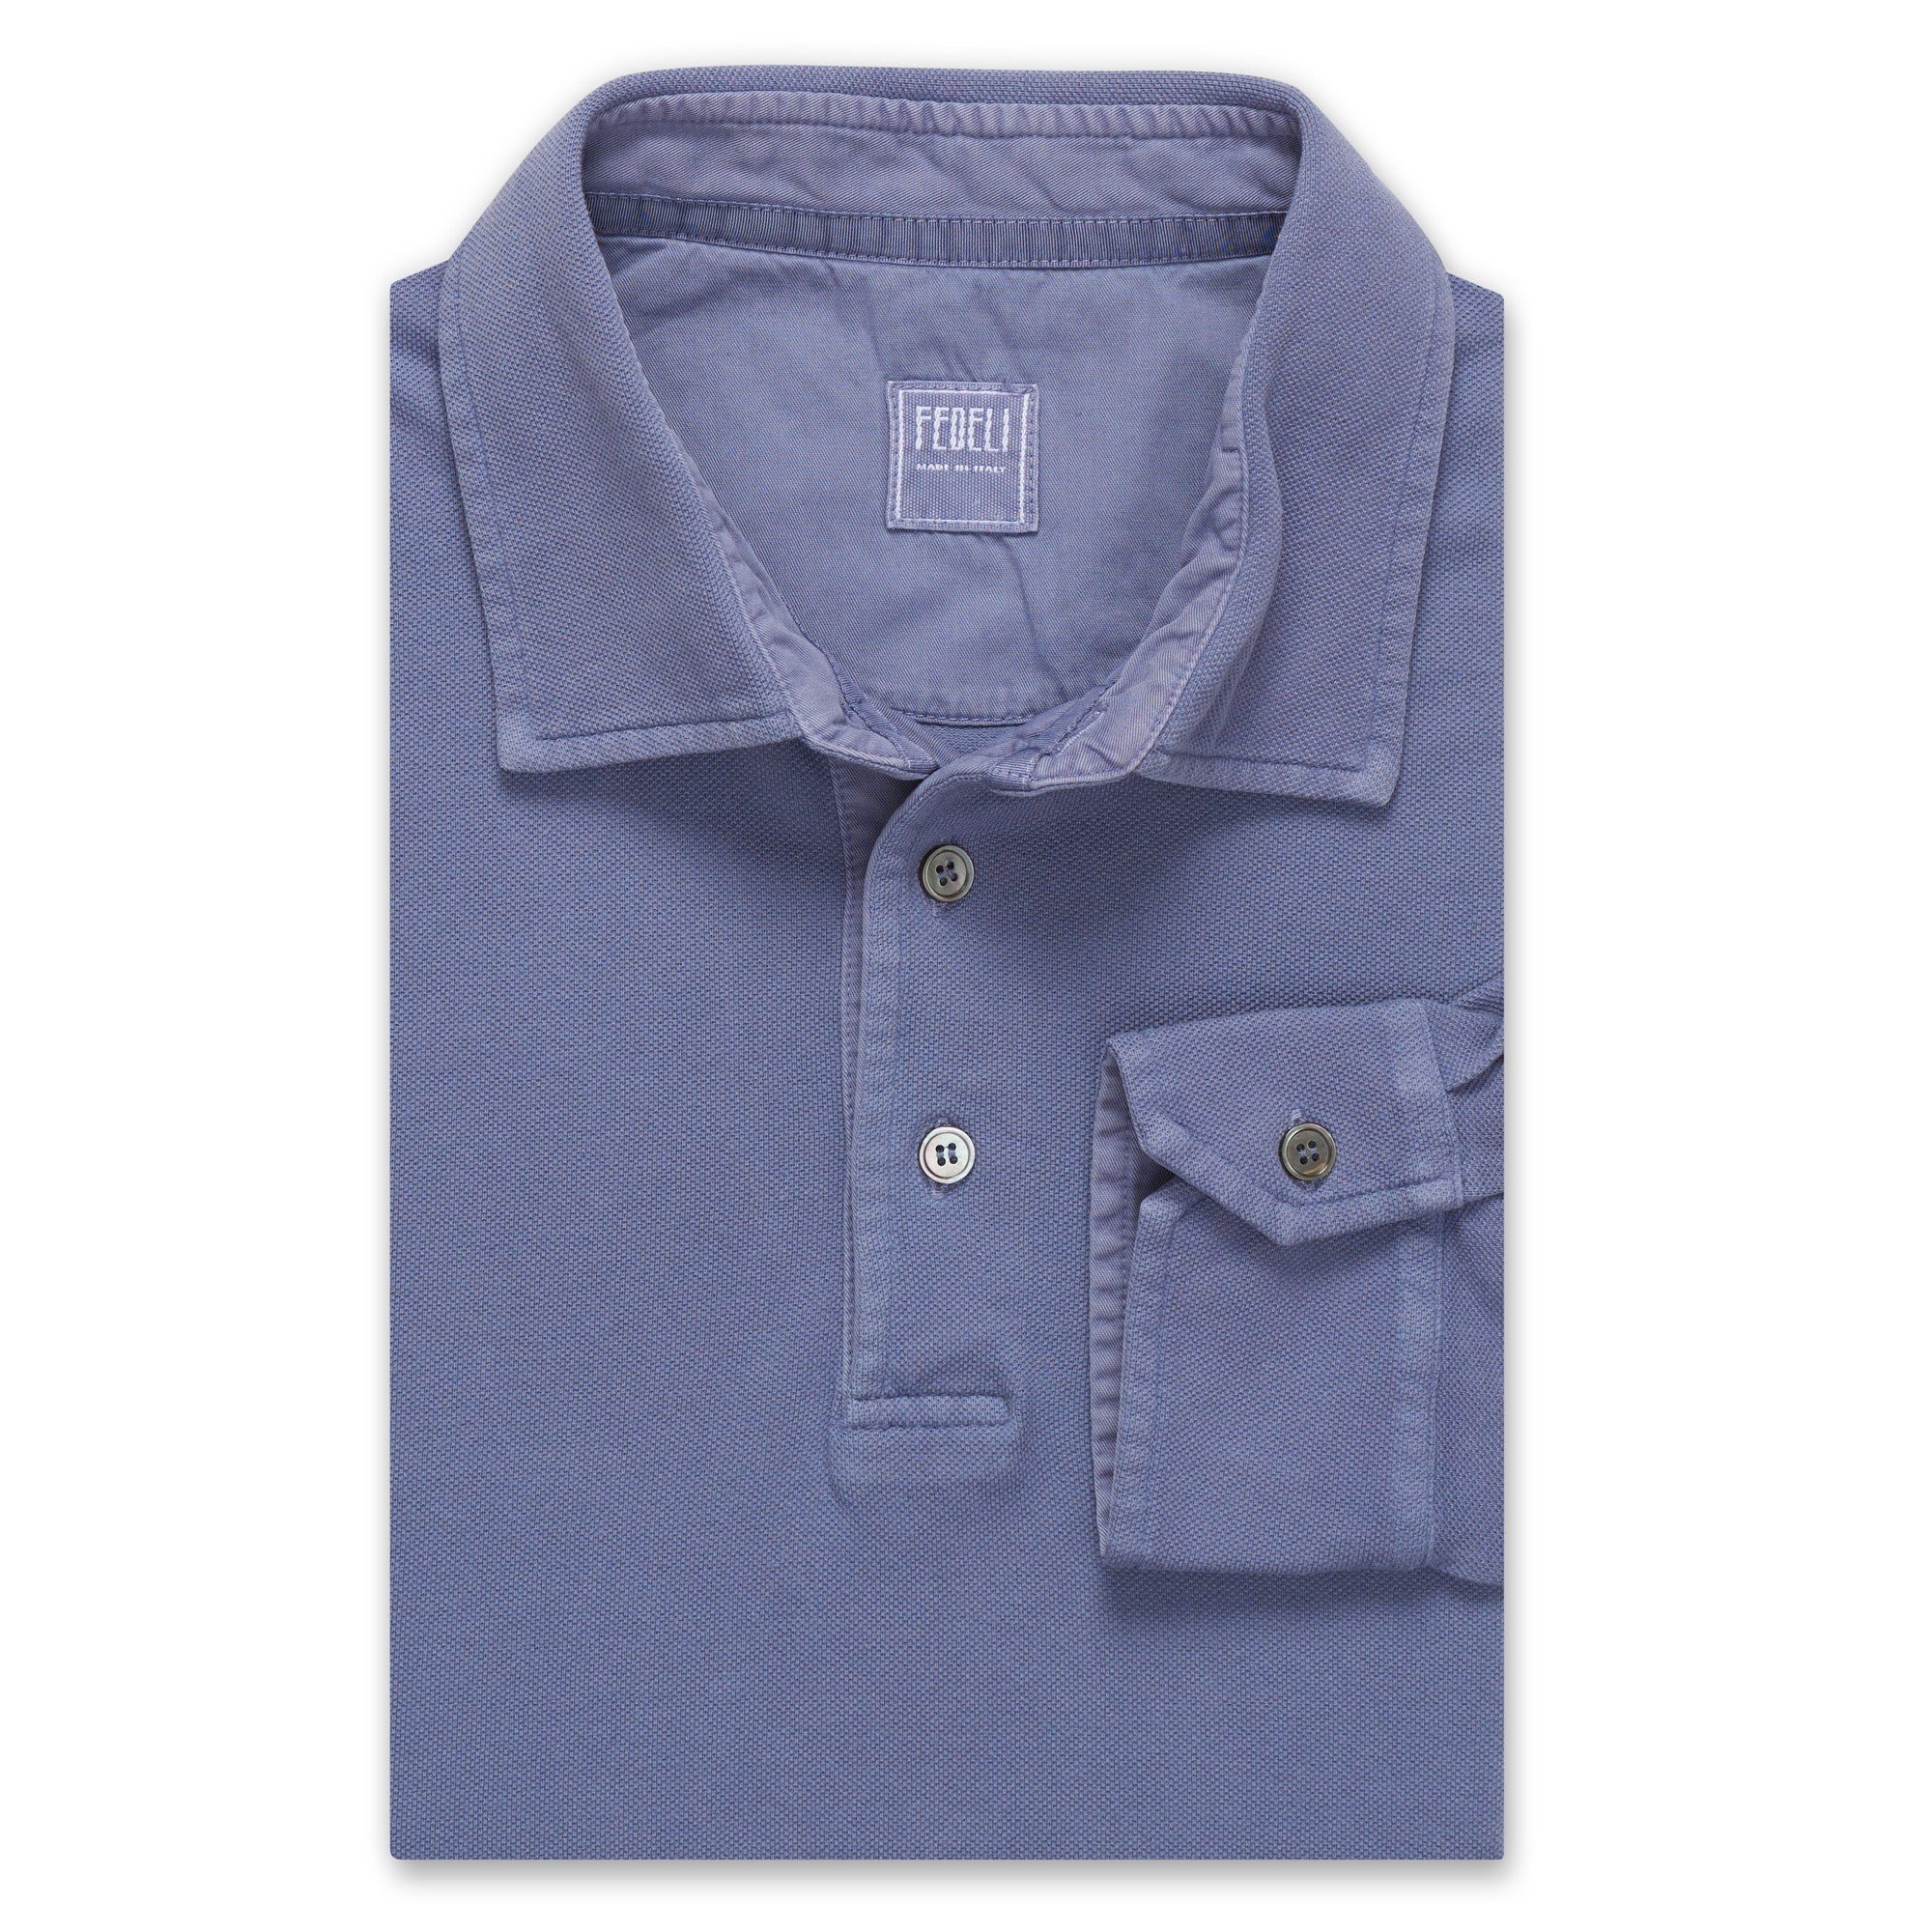 FEDELI "North" Steel Blue Cotton Pique Long Sleeve Polo Shirt NEW XXL FEDELI